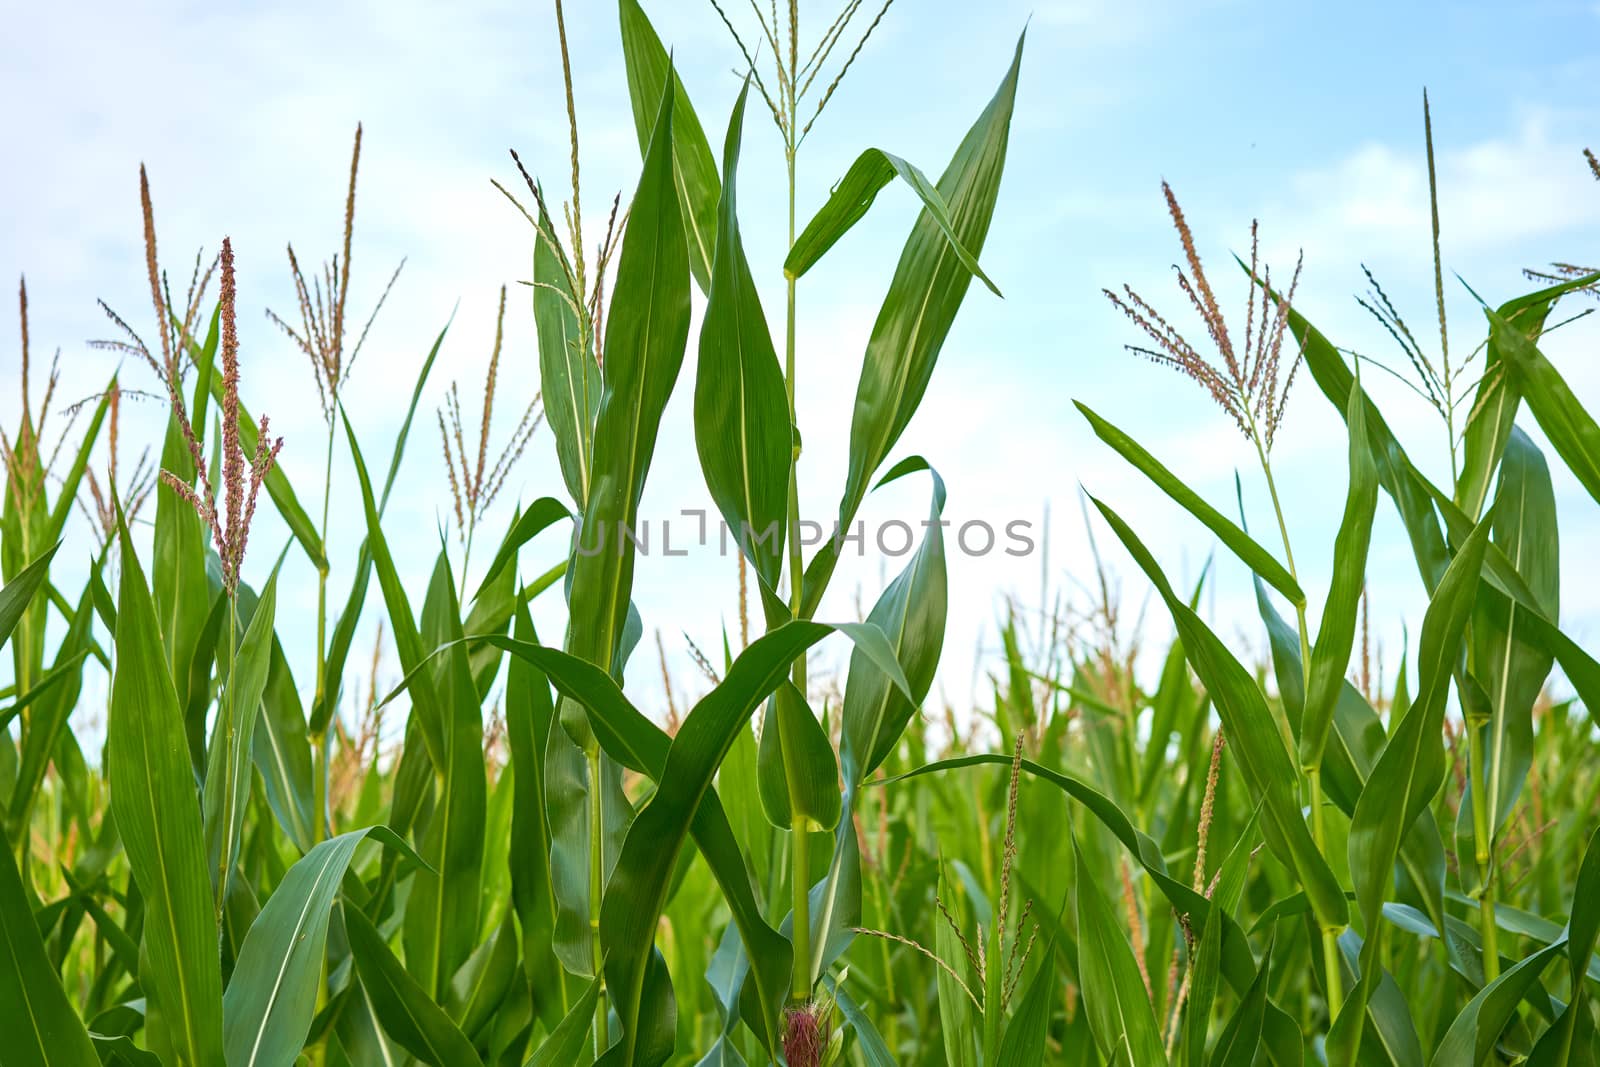 Corn agricultural field close up Summer harves season Summer vegetables growing